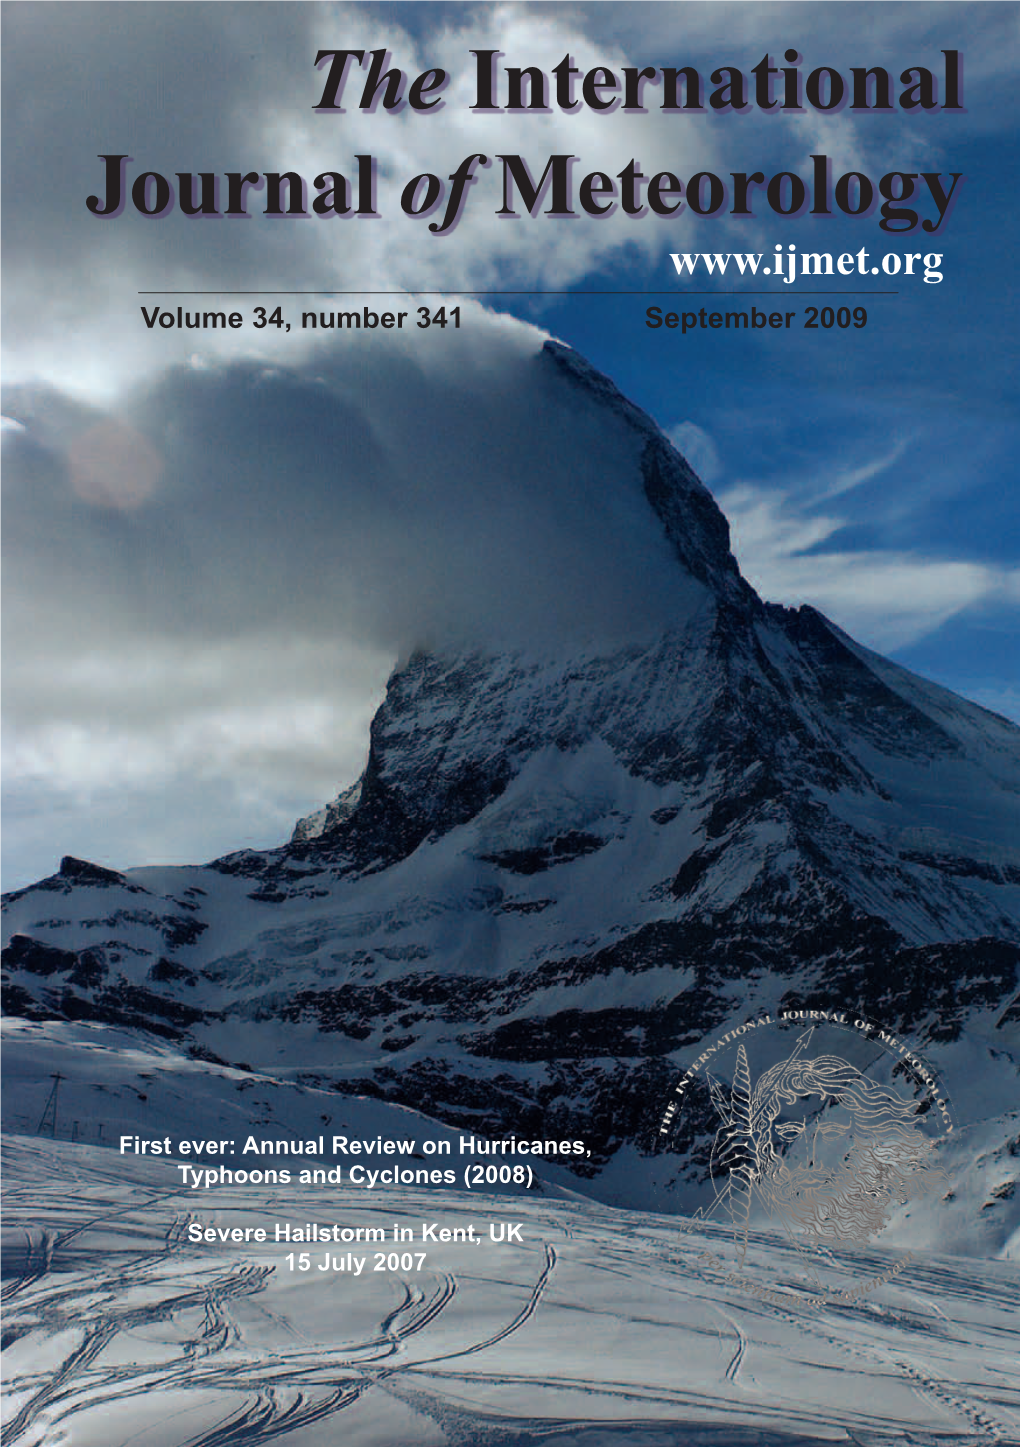 The International Journal of Meteorology Volume 34, Number 341 September 2009